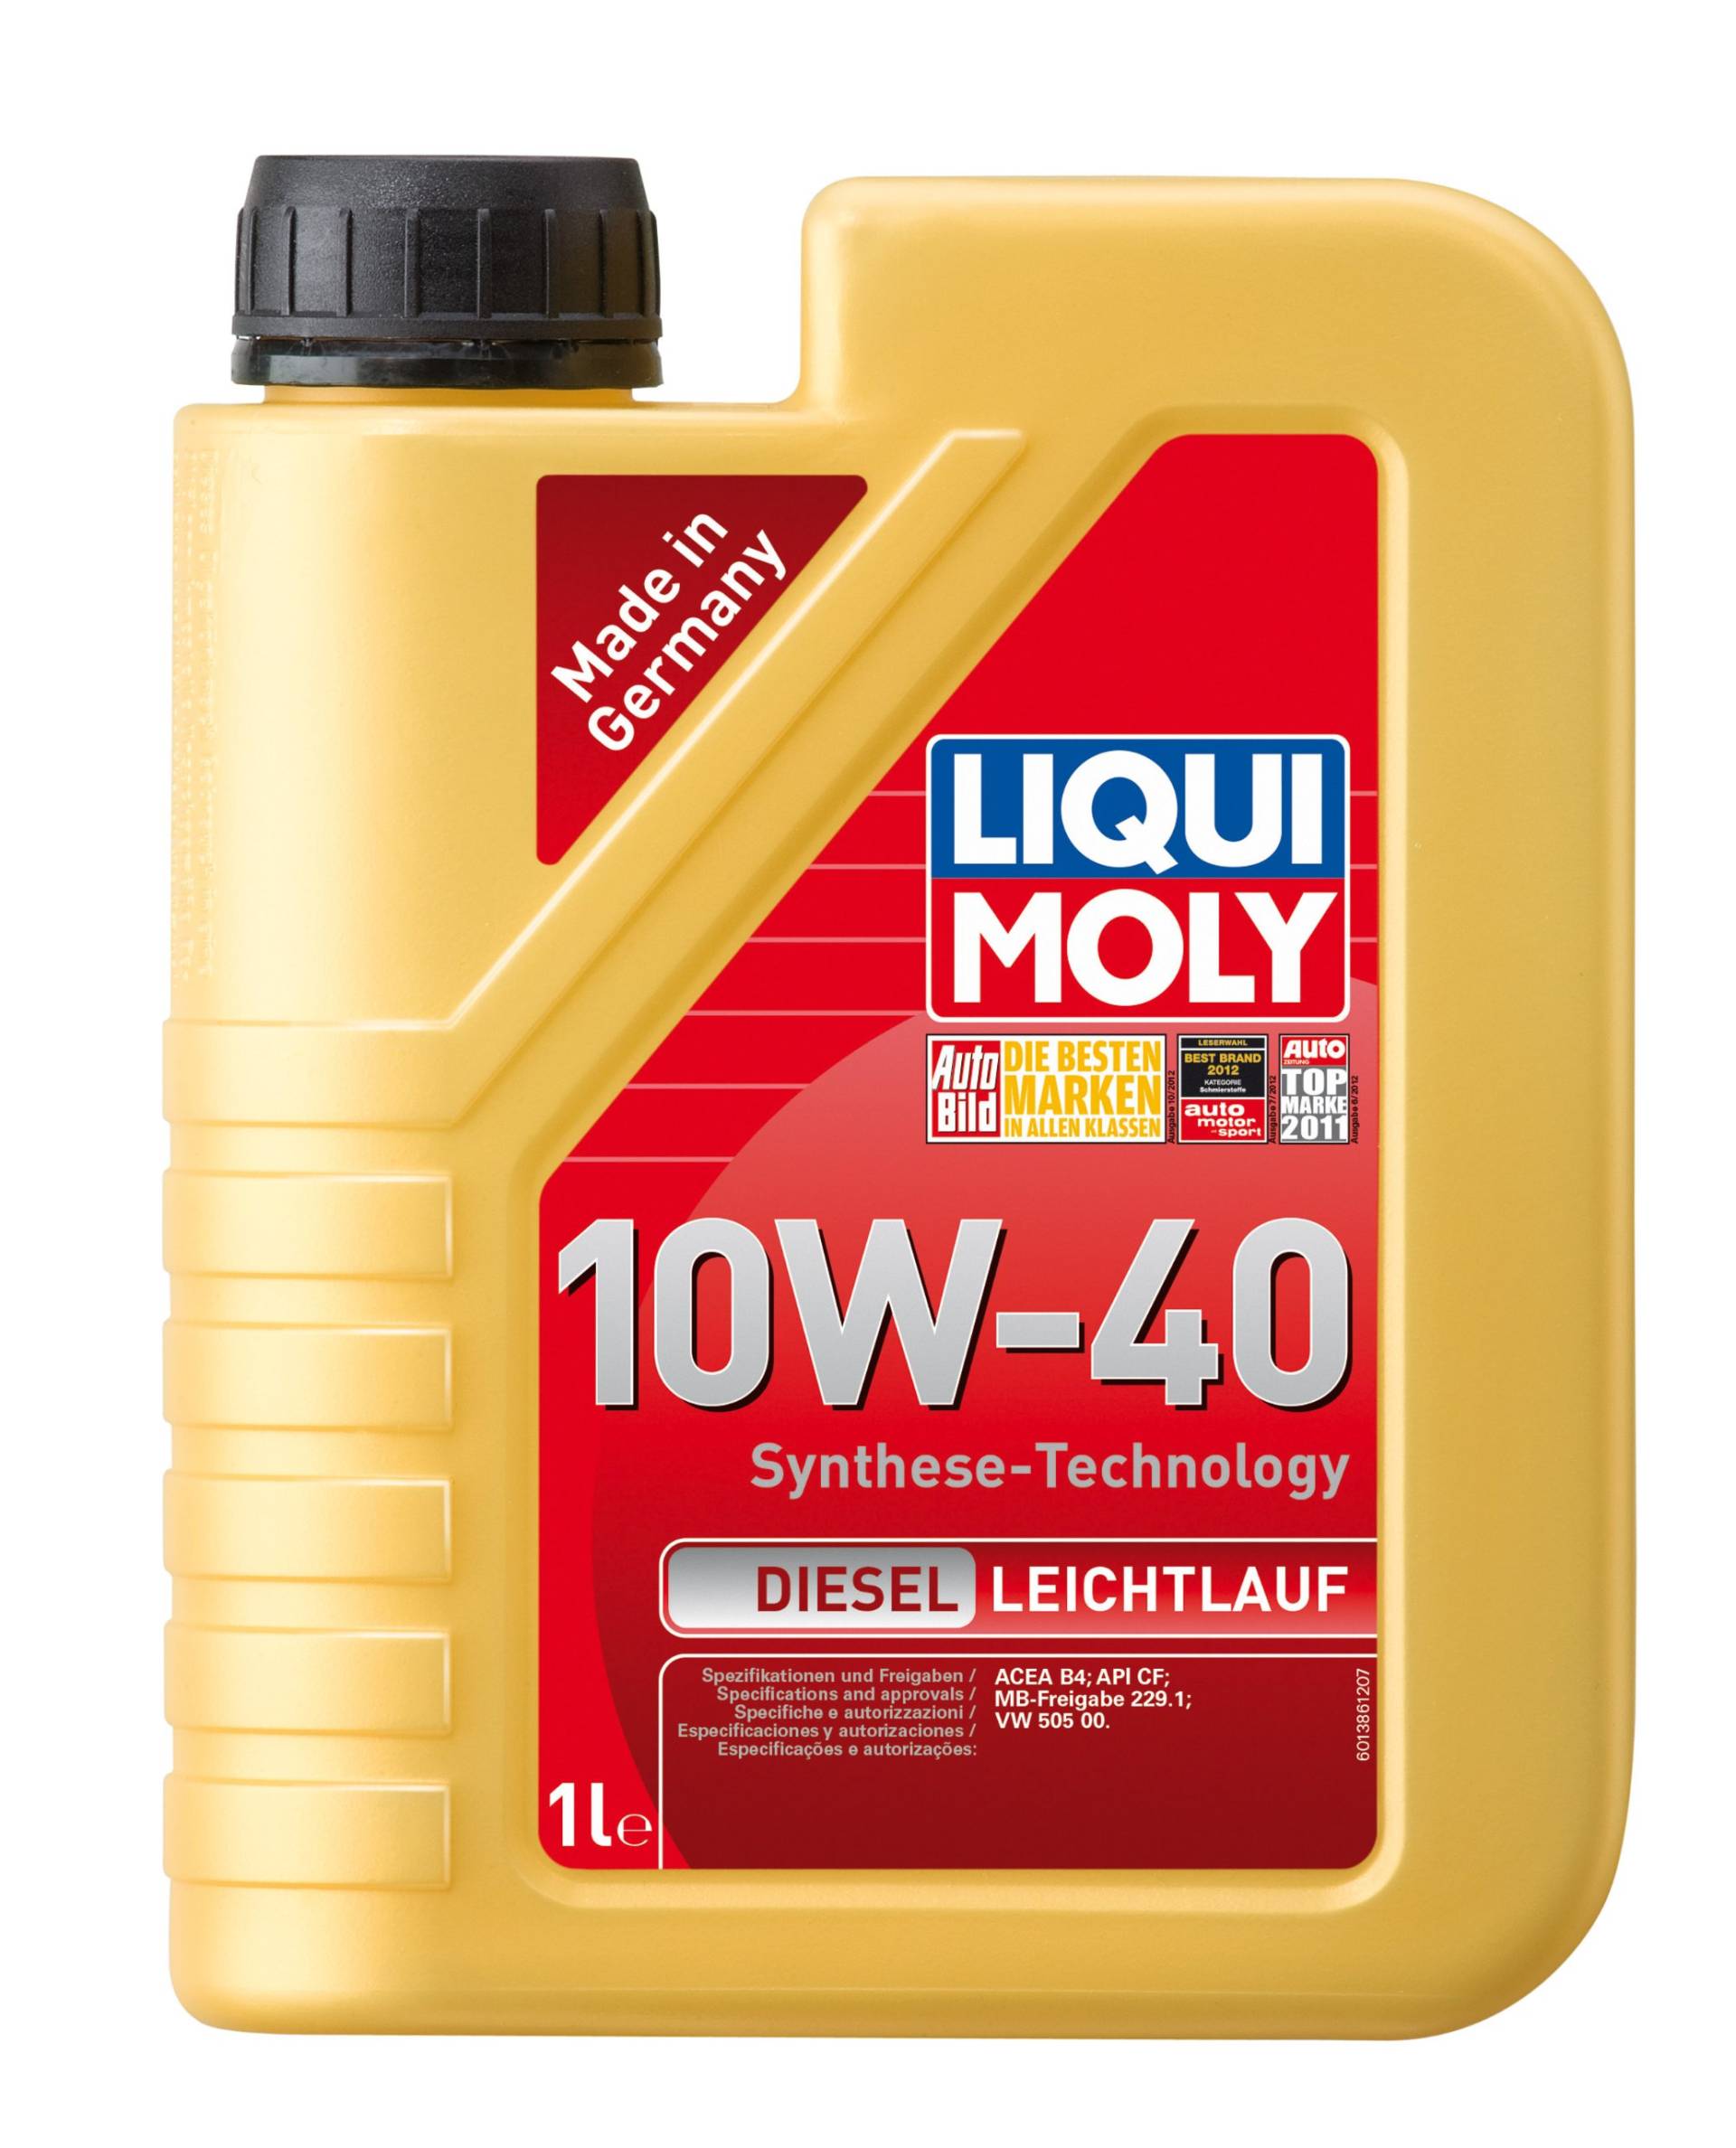 LIQUI MOLY Diesel Leichtlauf 10W-40 | 1 L | Synthesetechnologie Motoröl | Art.-Nr.: 1386 von Liqui Moly